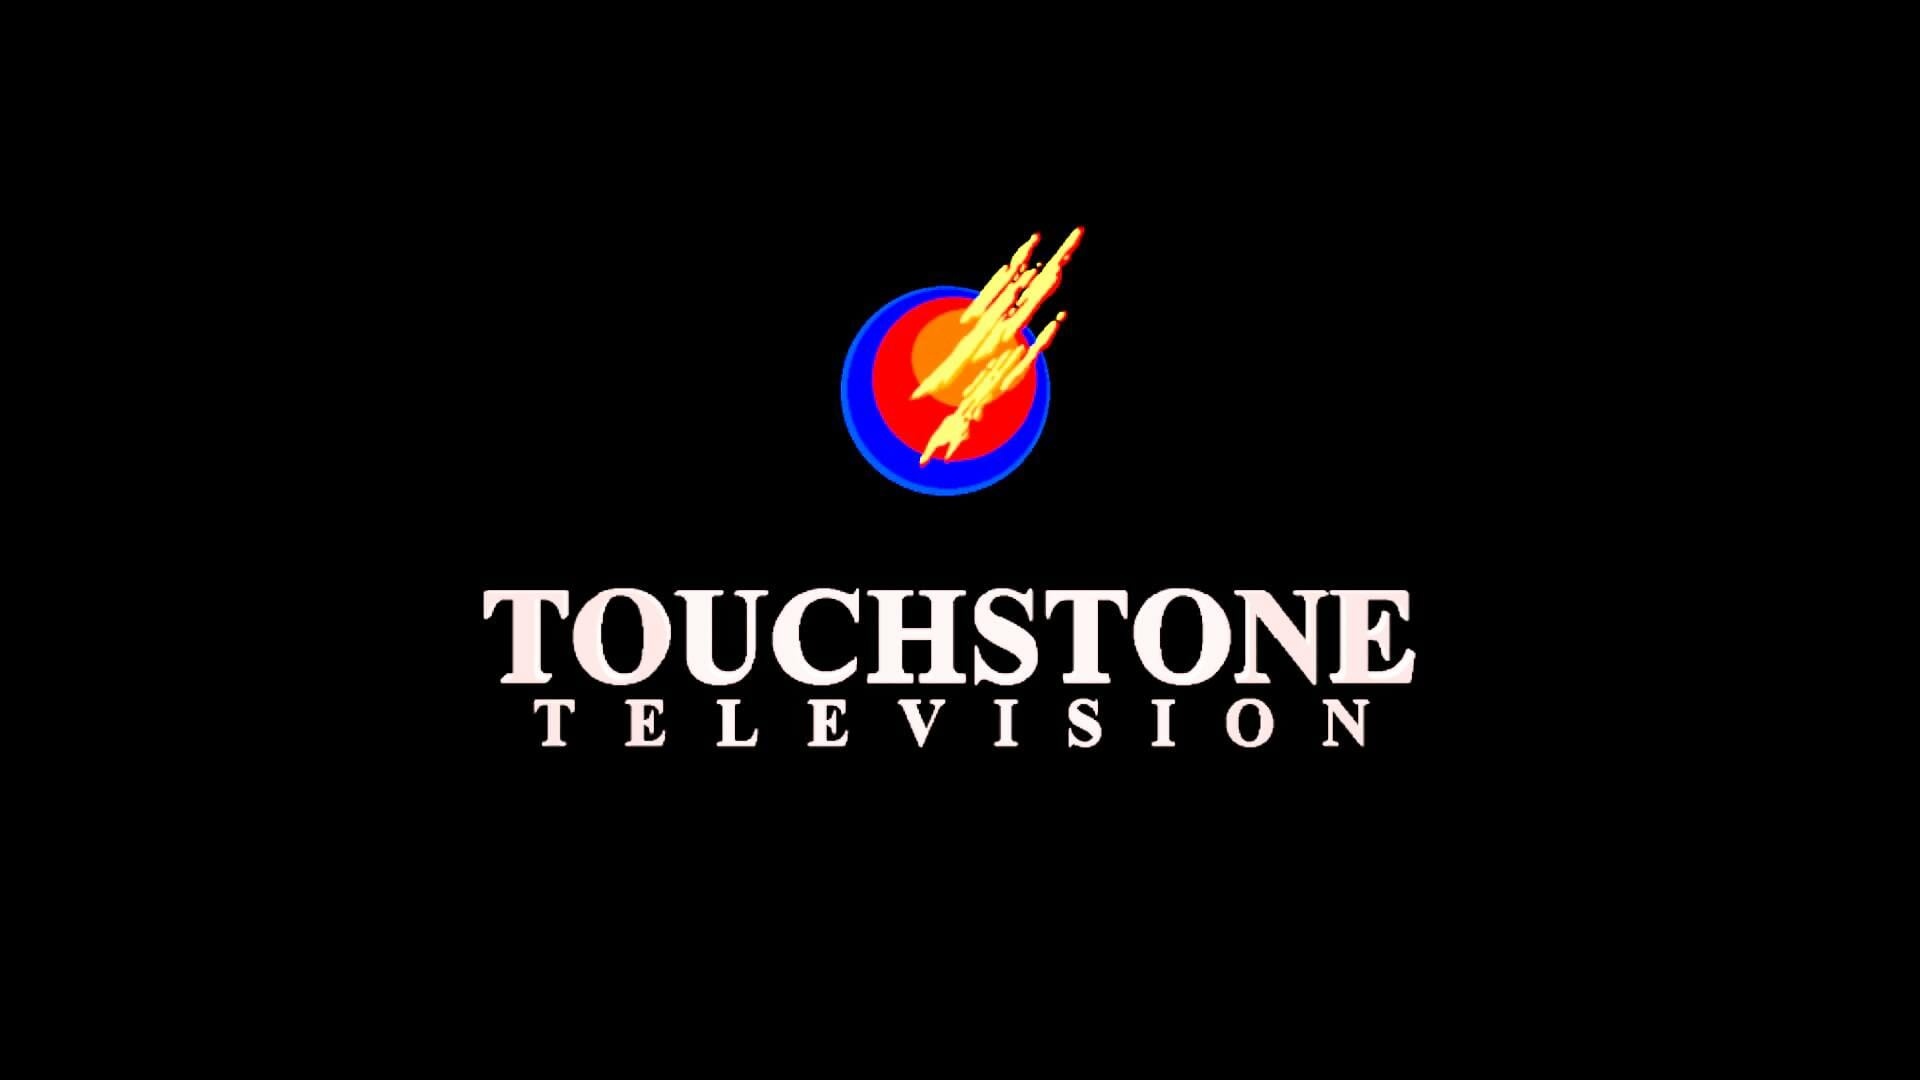 Touchstone Pictures, Everything touchstone, Disney Plus, 1920x1080 Full HD Desktop